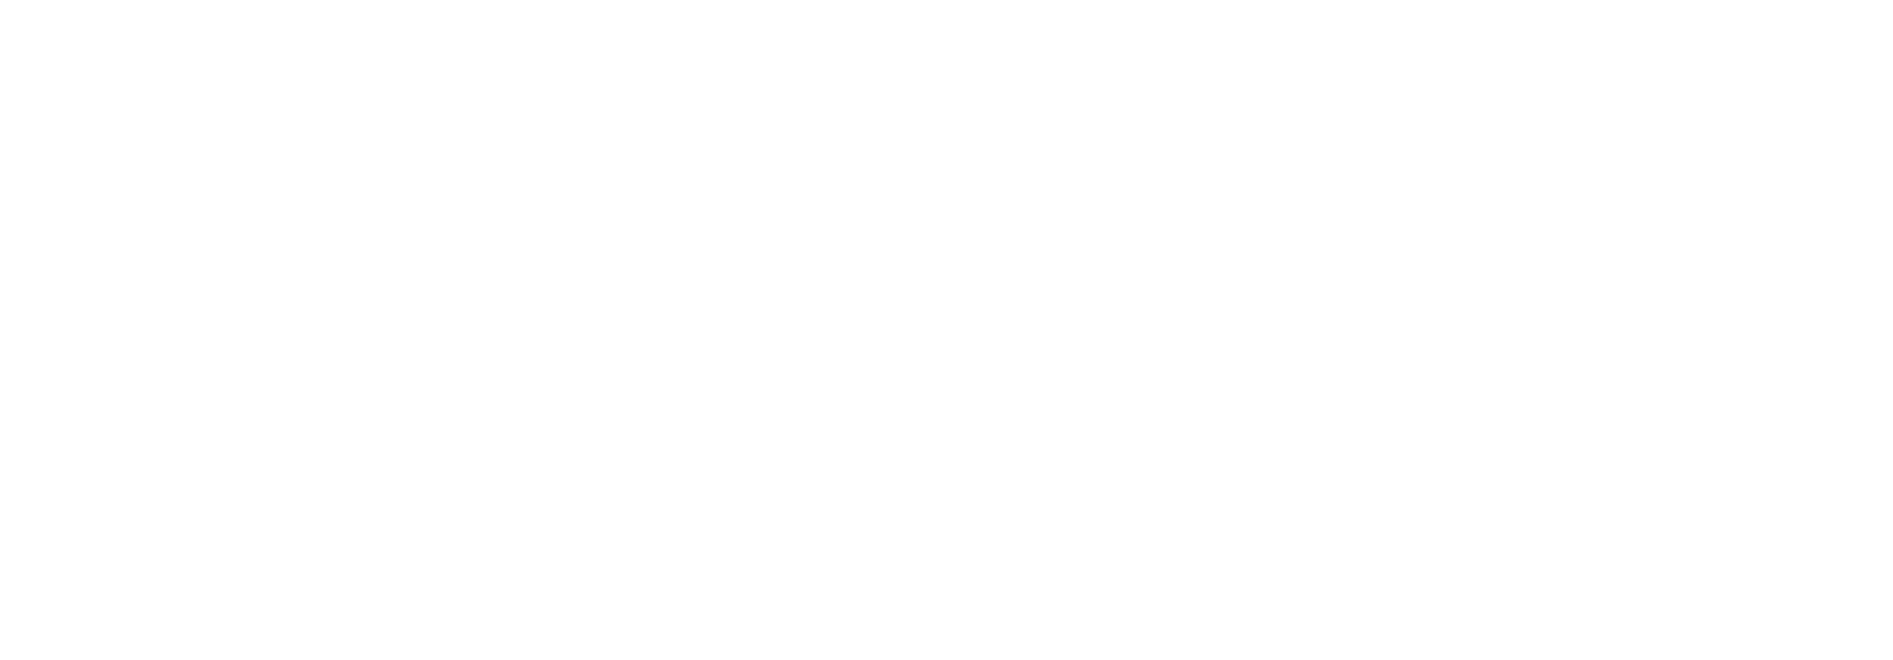 https://www.phidias-hpc.eu/sites/default/files/revslider/image/Phidias_logo_USO__final_White_1.png